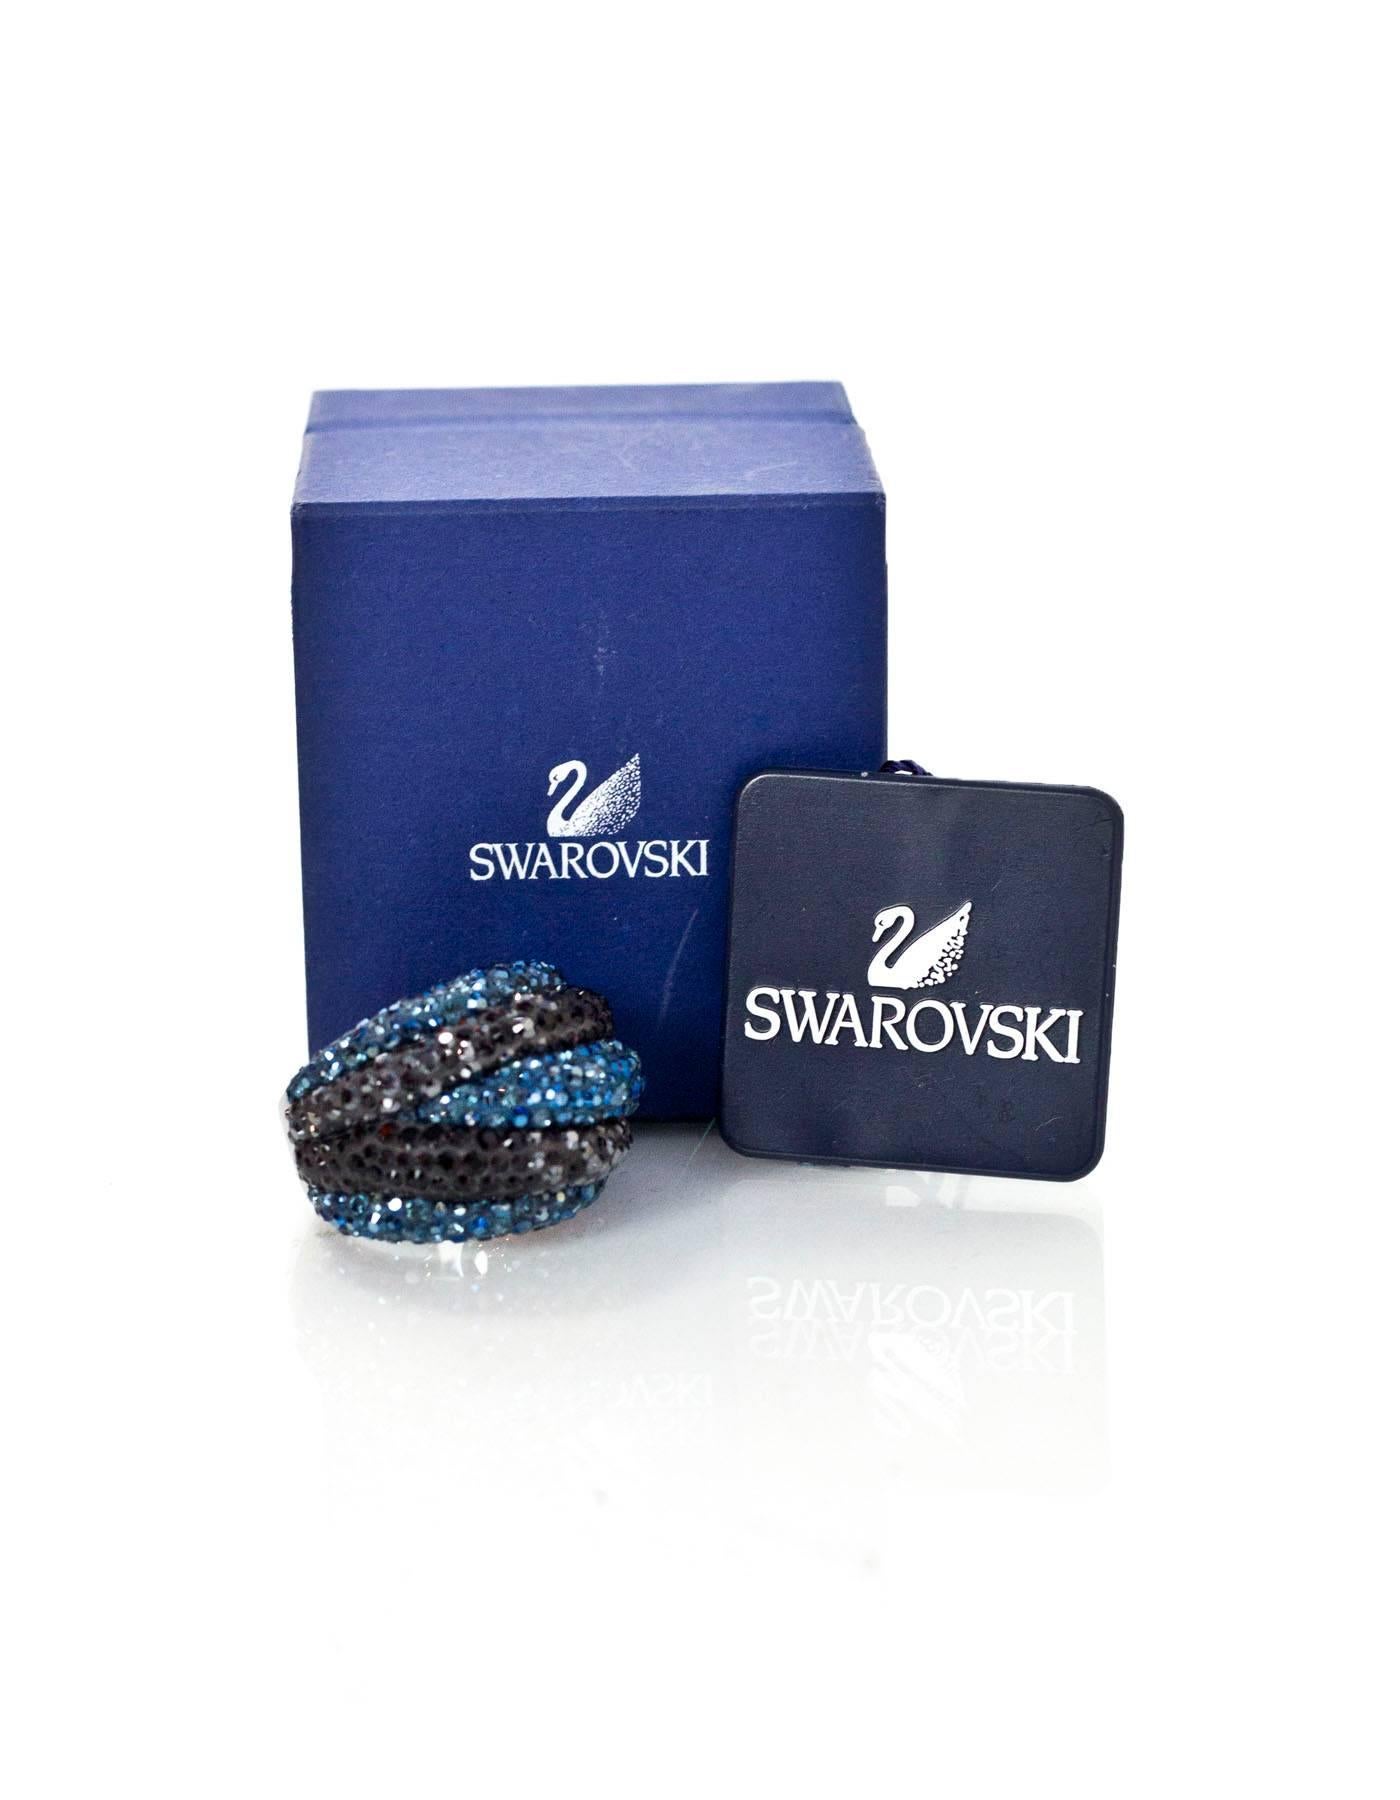 Swarovski Black & Navy Appolon Pave Crystal Ring Sz 7 with Box 1